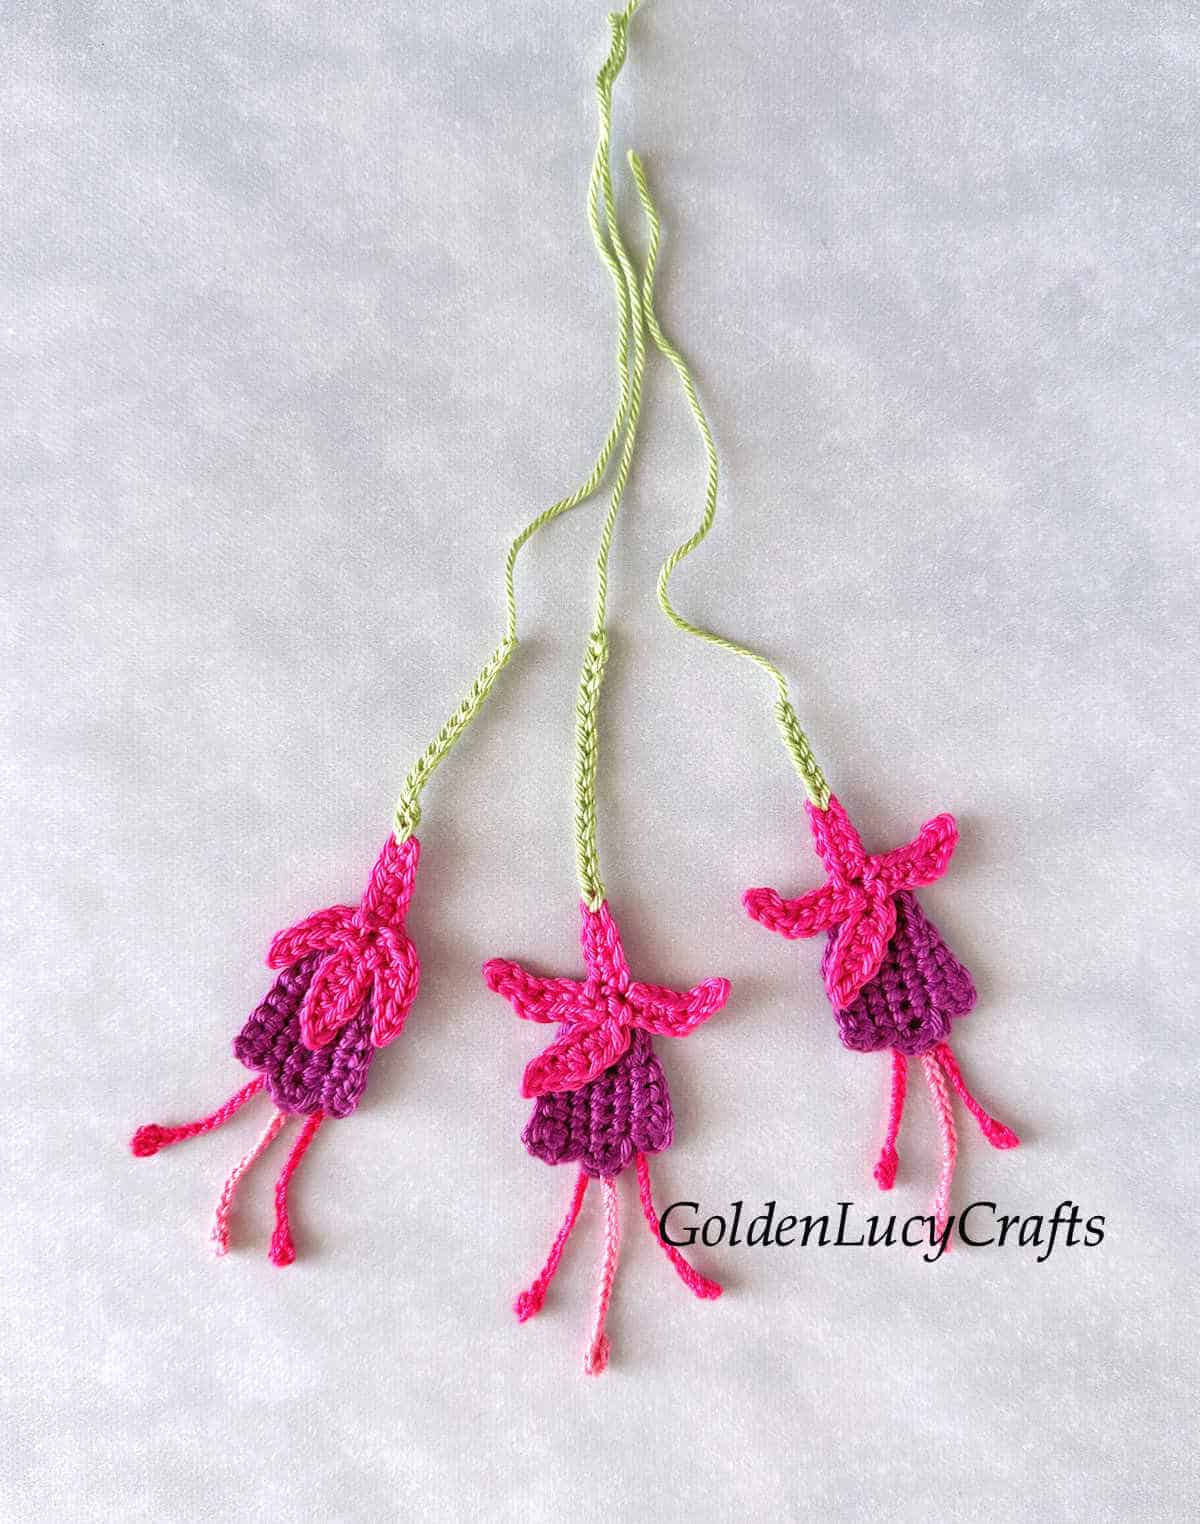 Three crocheted fuchsia flowers.